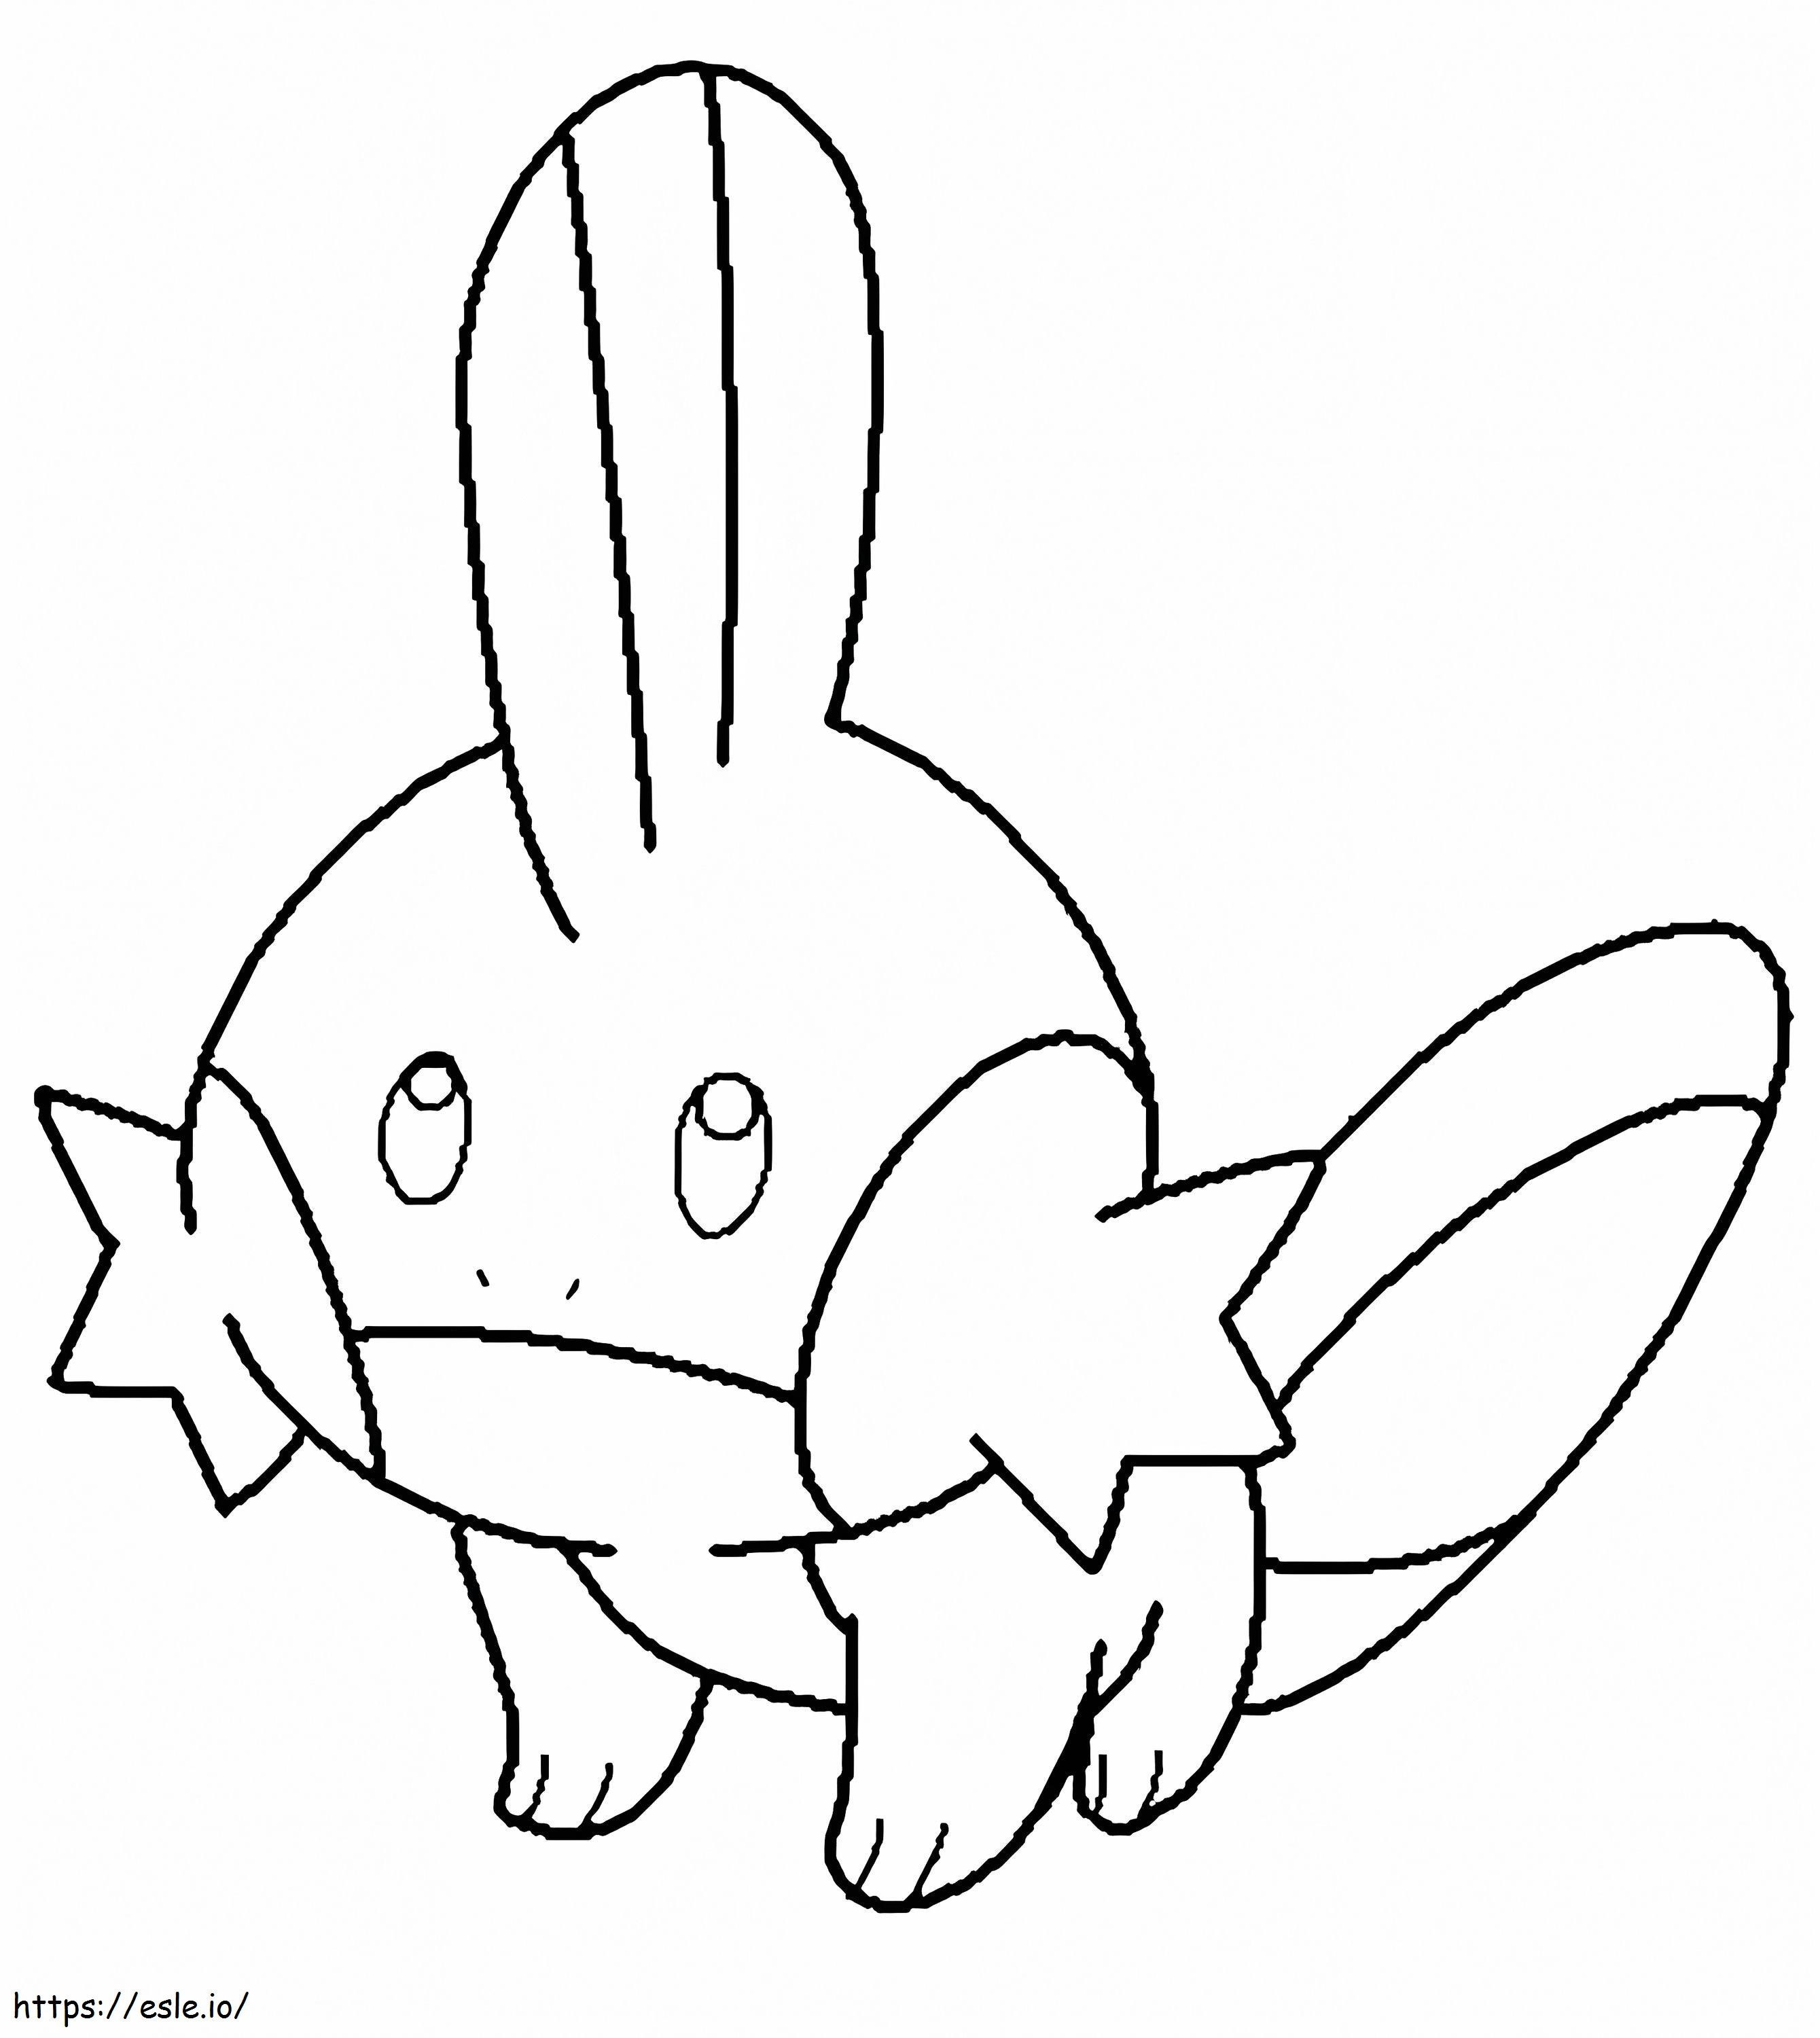 Mudkip-Pokémon ausmalbilder